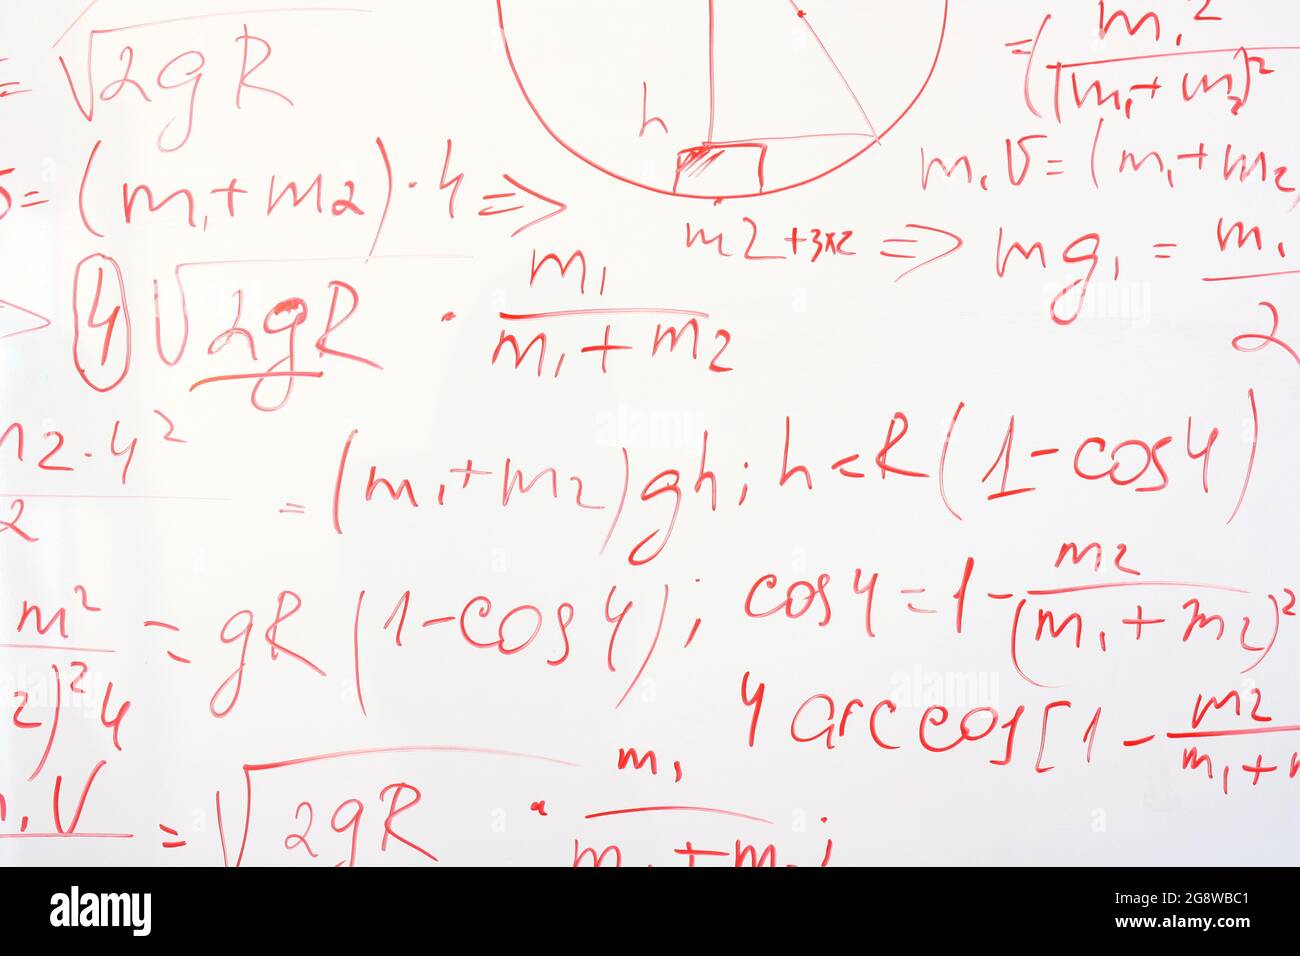 formulas on a whiteboard Stock Photo - Alamy